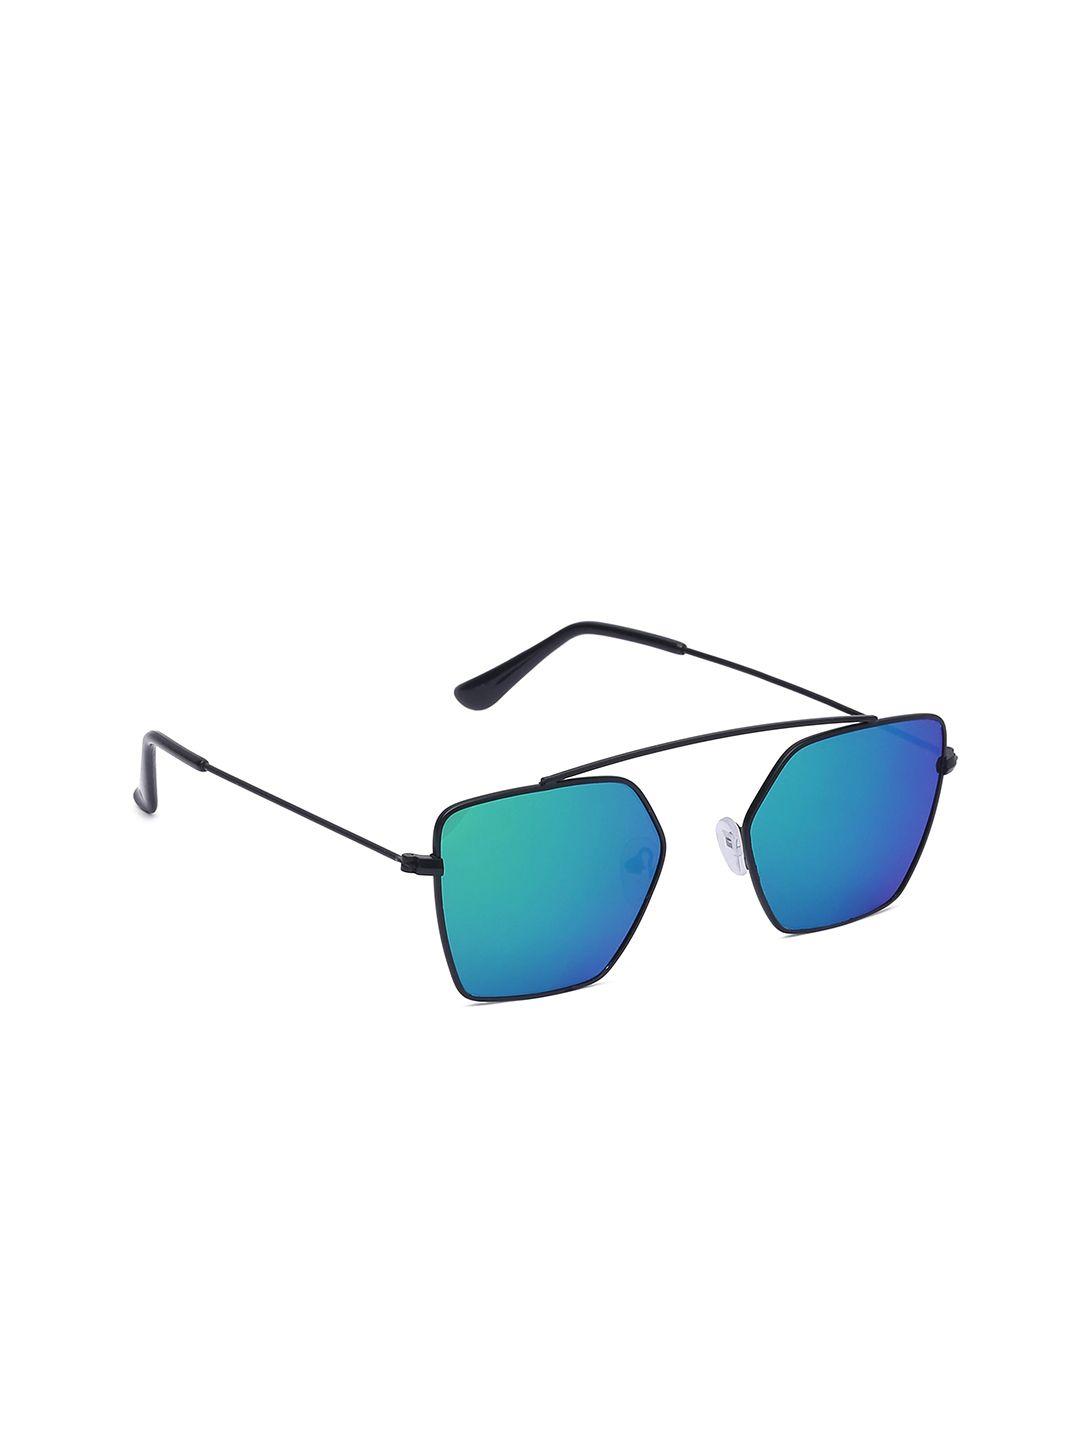 swiss design unisex green square sunglasses